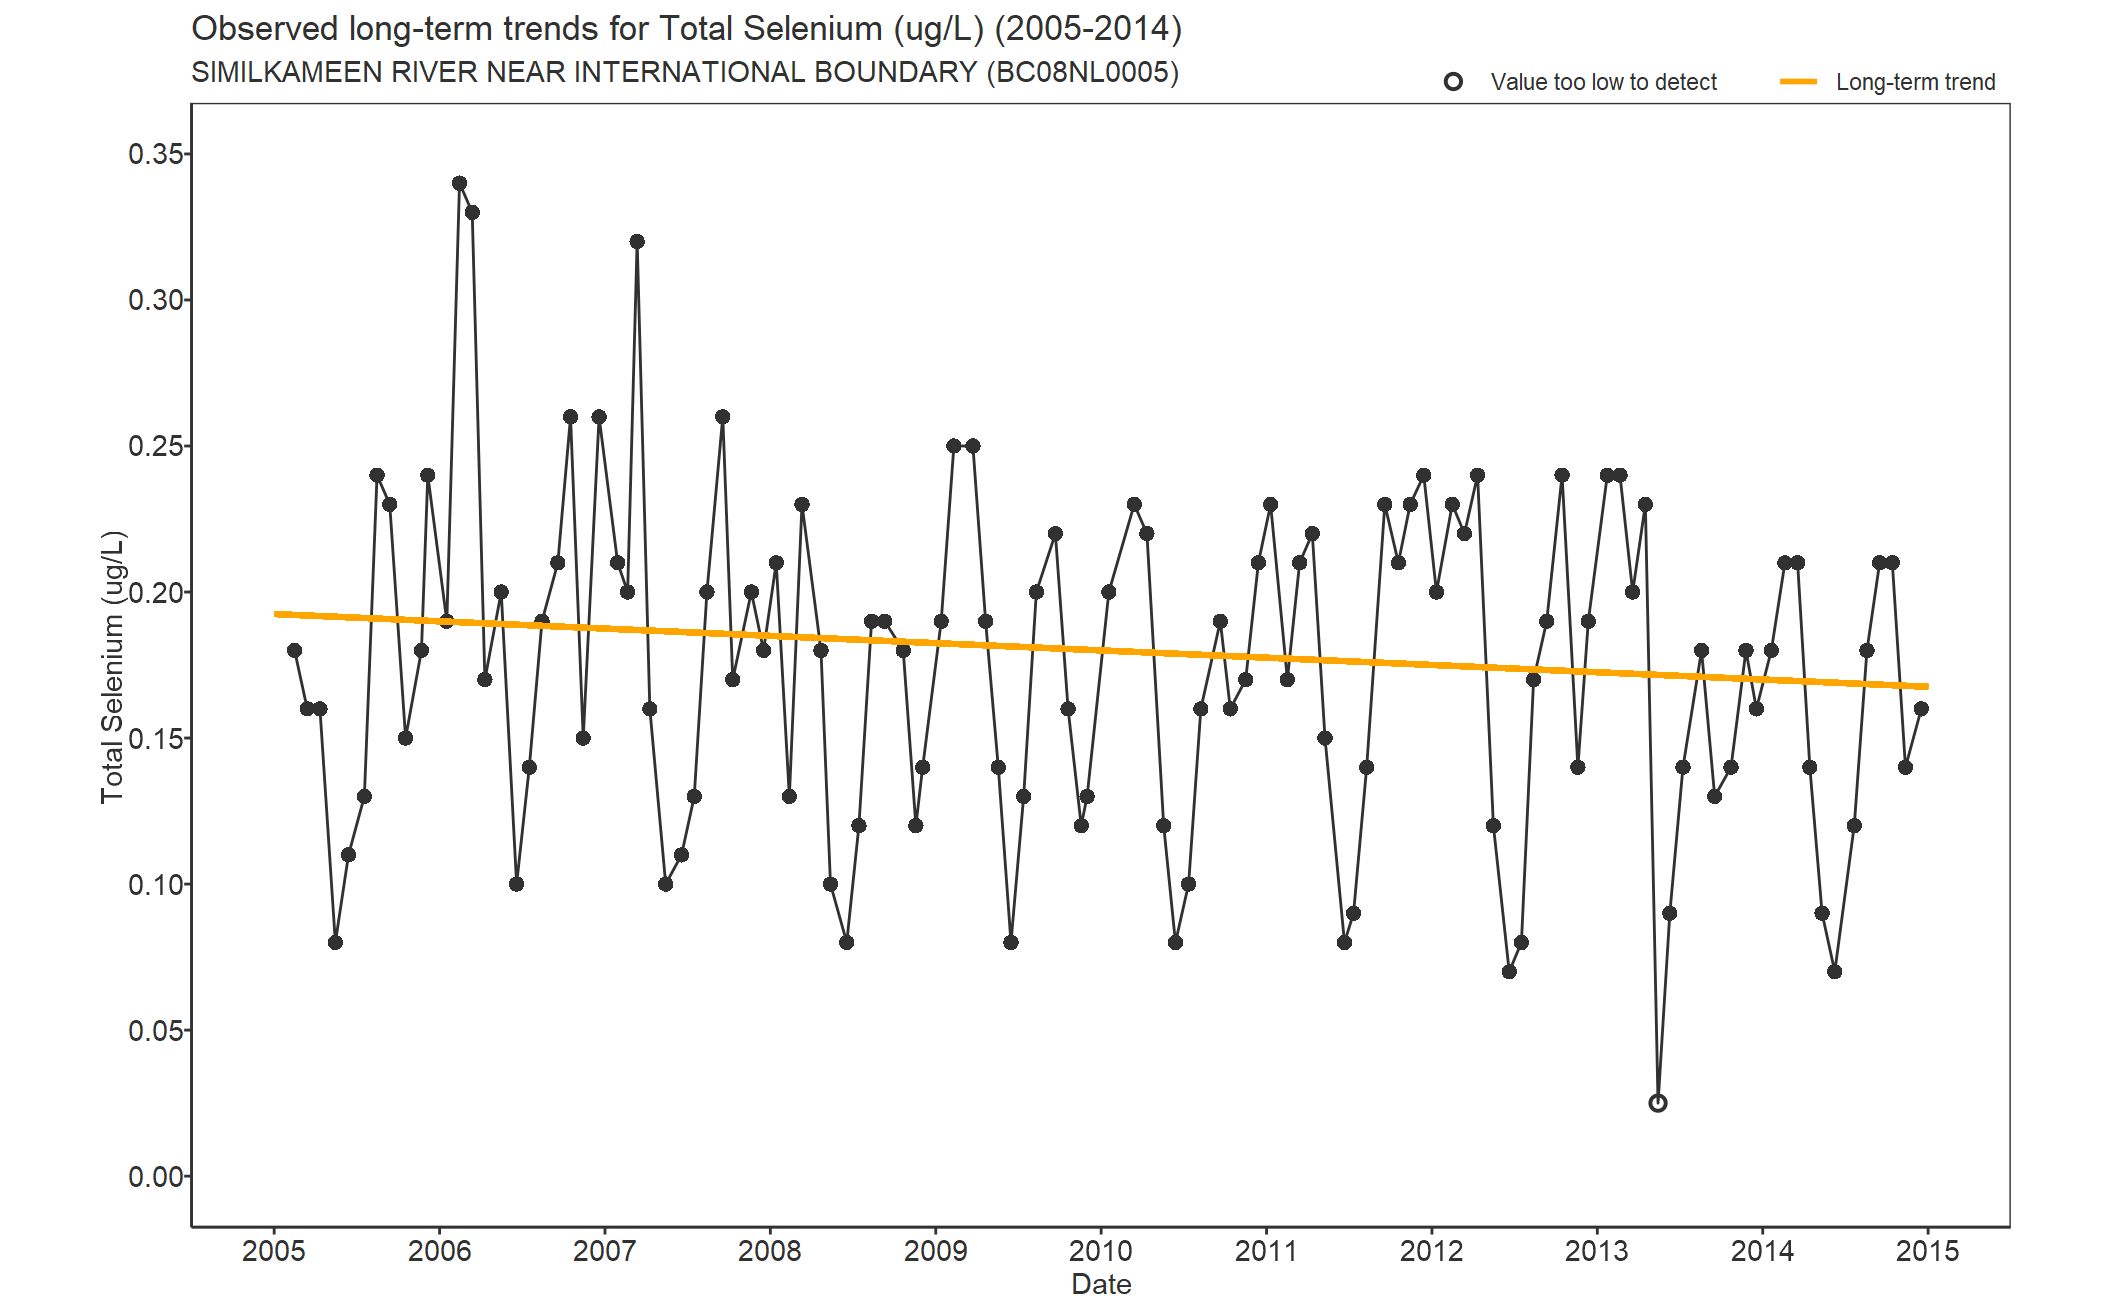 Observed long-term trends for Total Selenium (2005-2014)